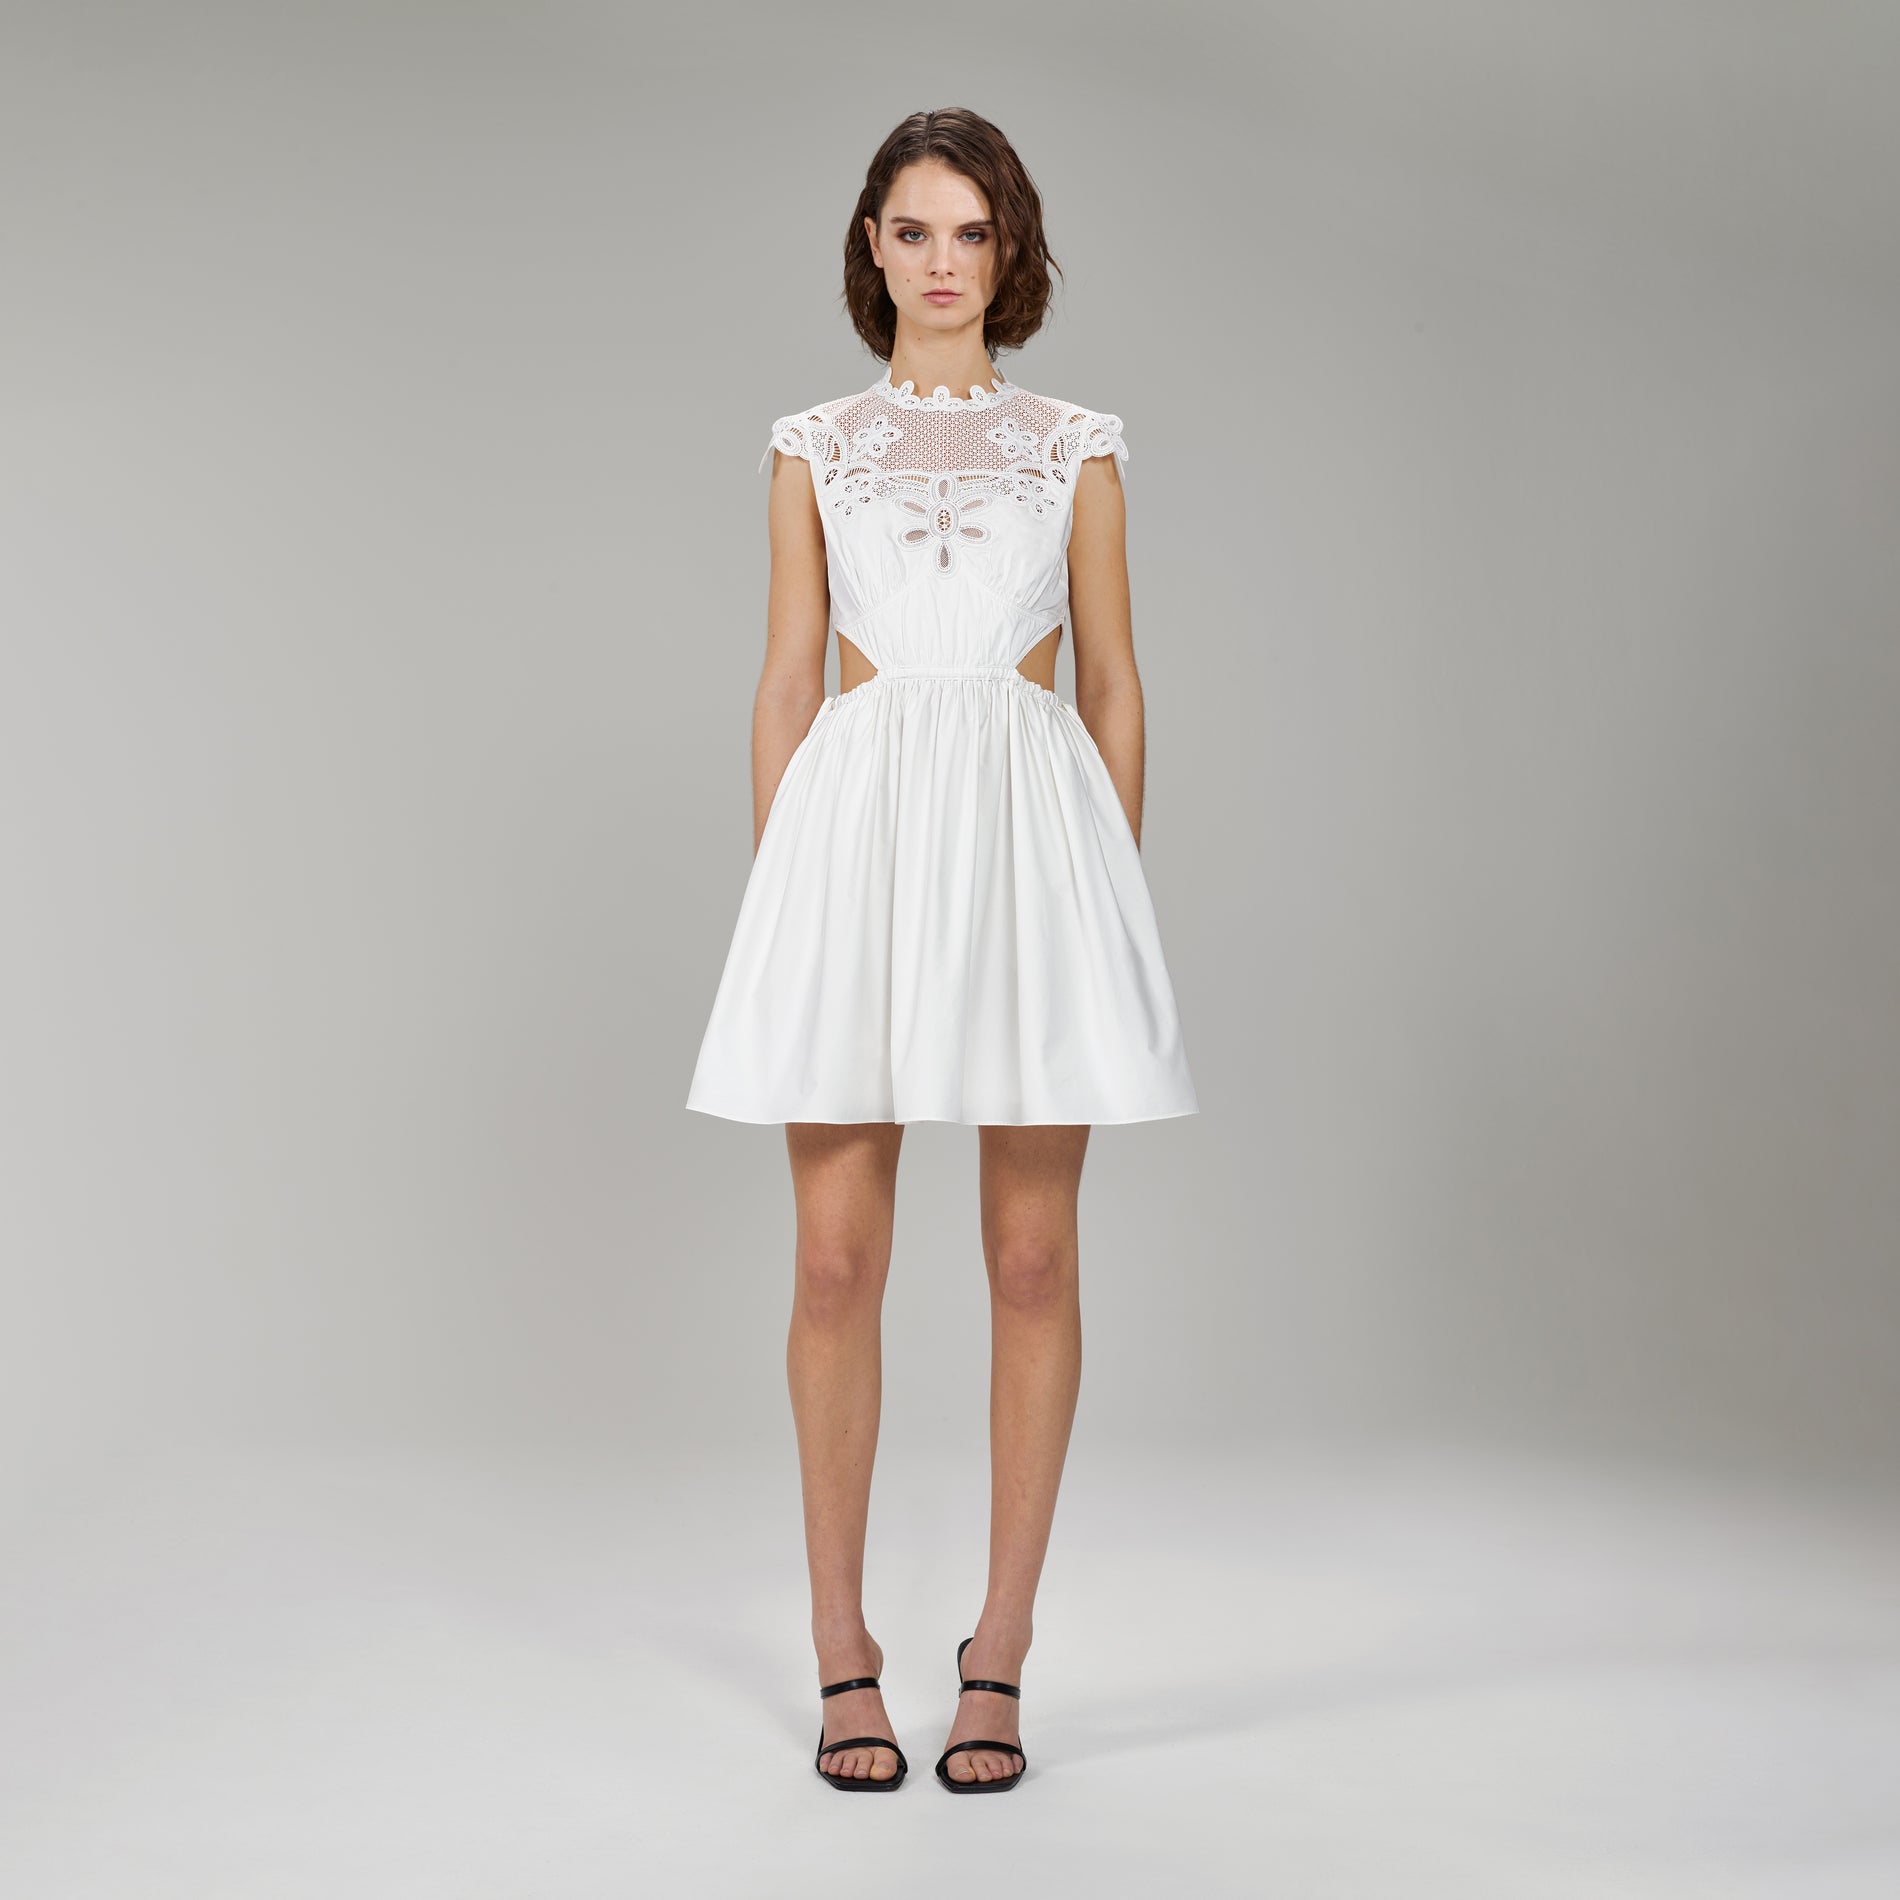 A woman wearing the White Cotton Guipure Lace Bib Mini Dress